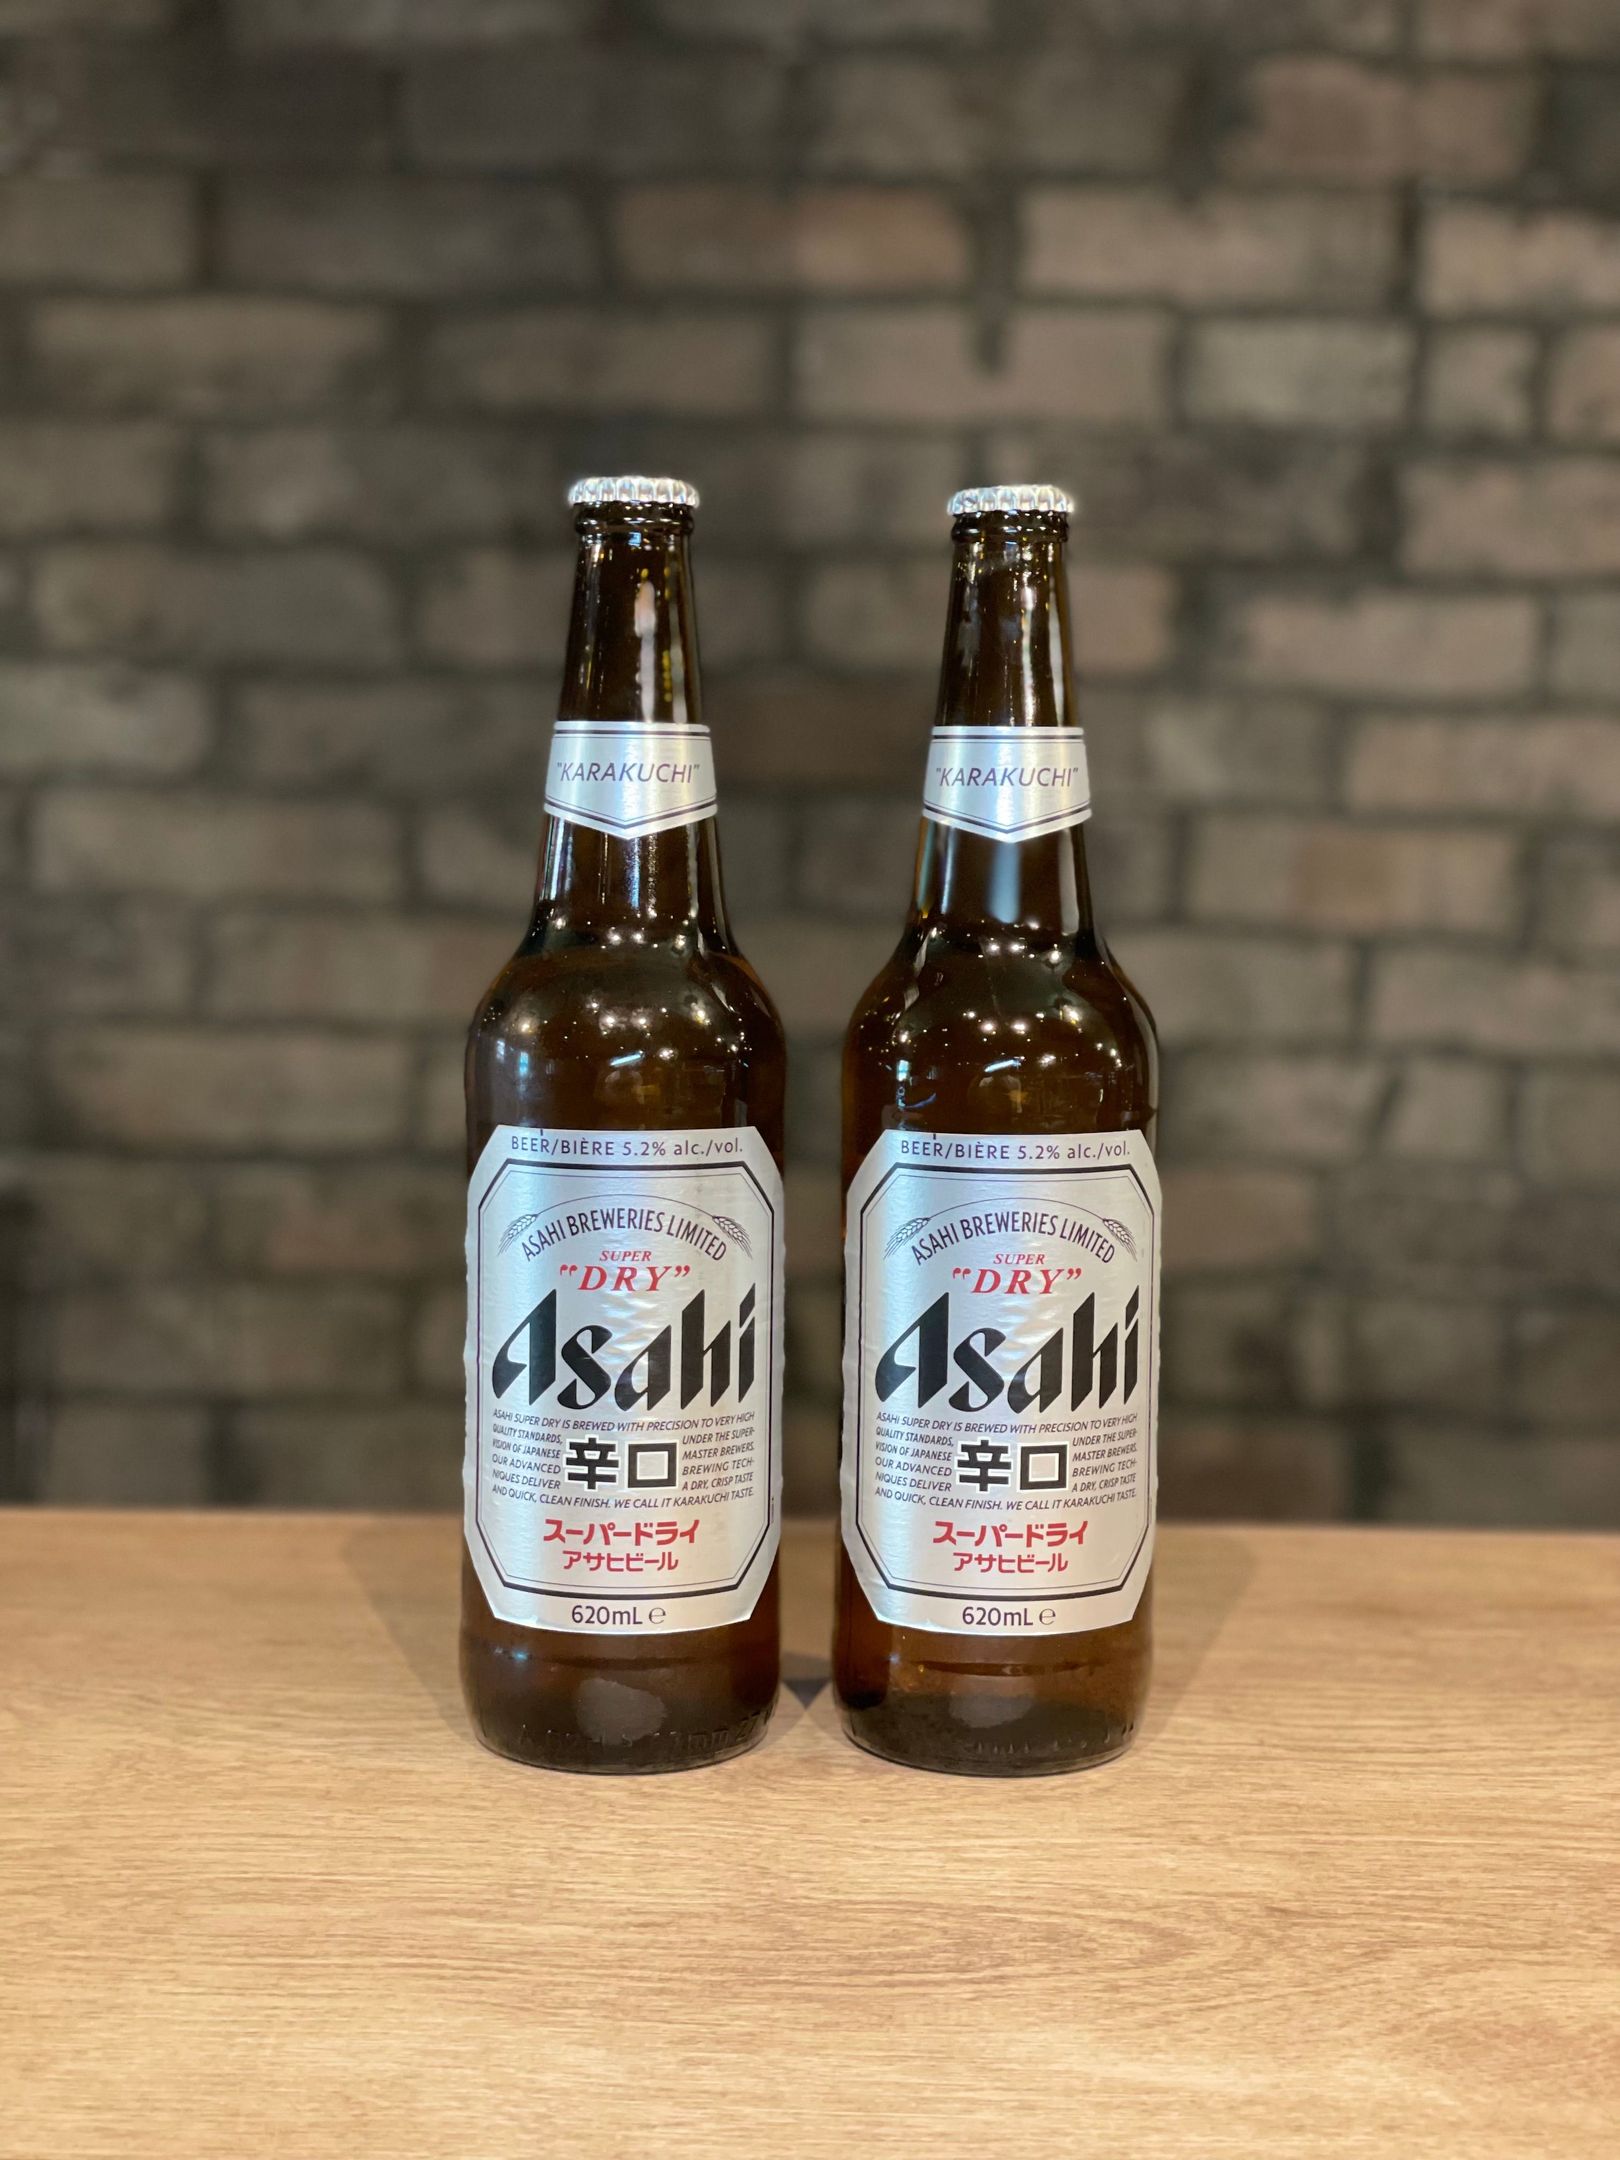 Asahi Daibin (ABV5.2%, 620ml)